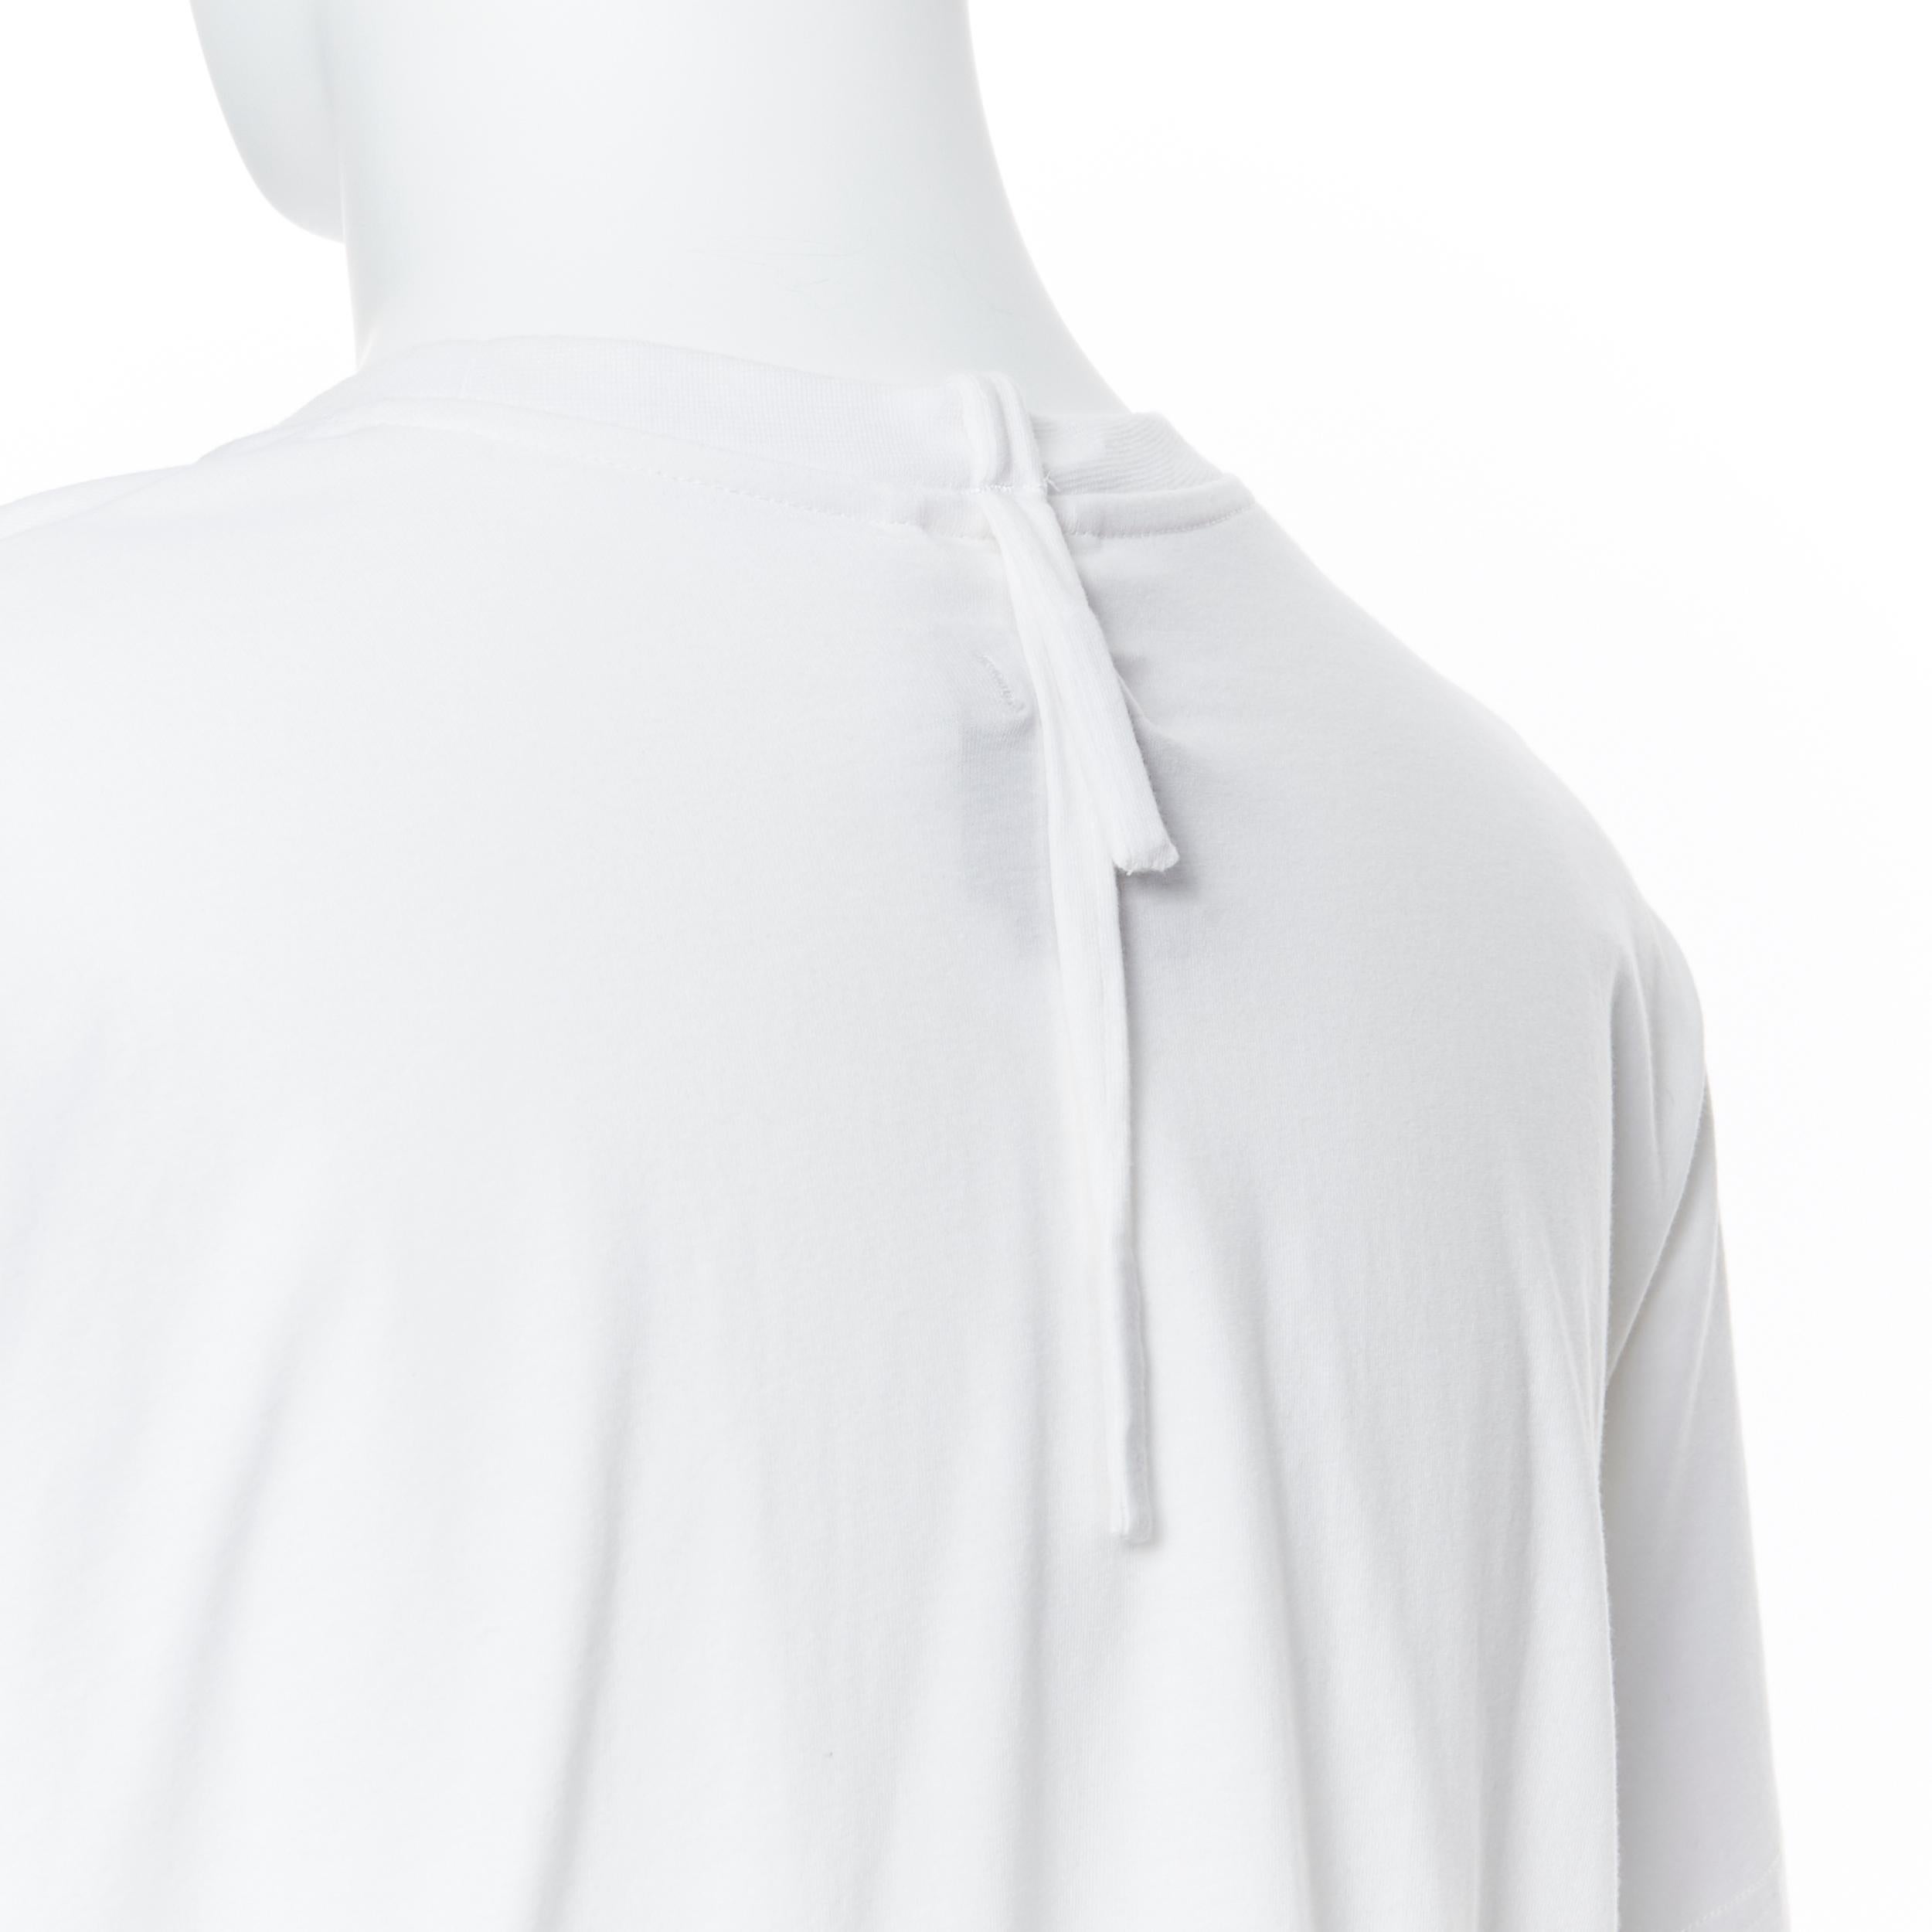 Gray CRAIG GREEN white cotton weighed drawstring strap short sleeve t-shirt top M